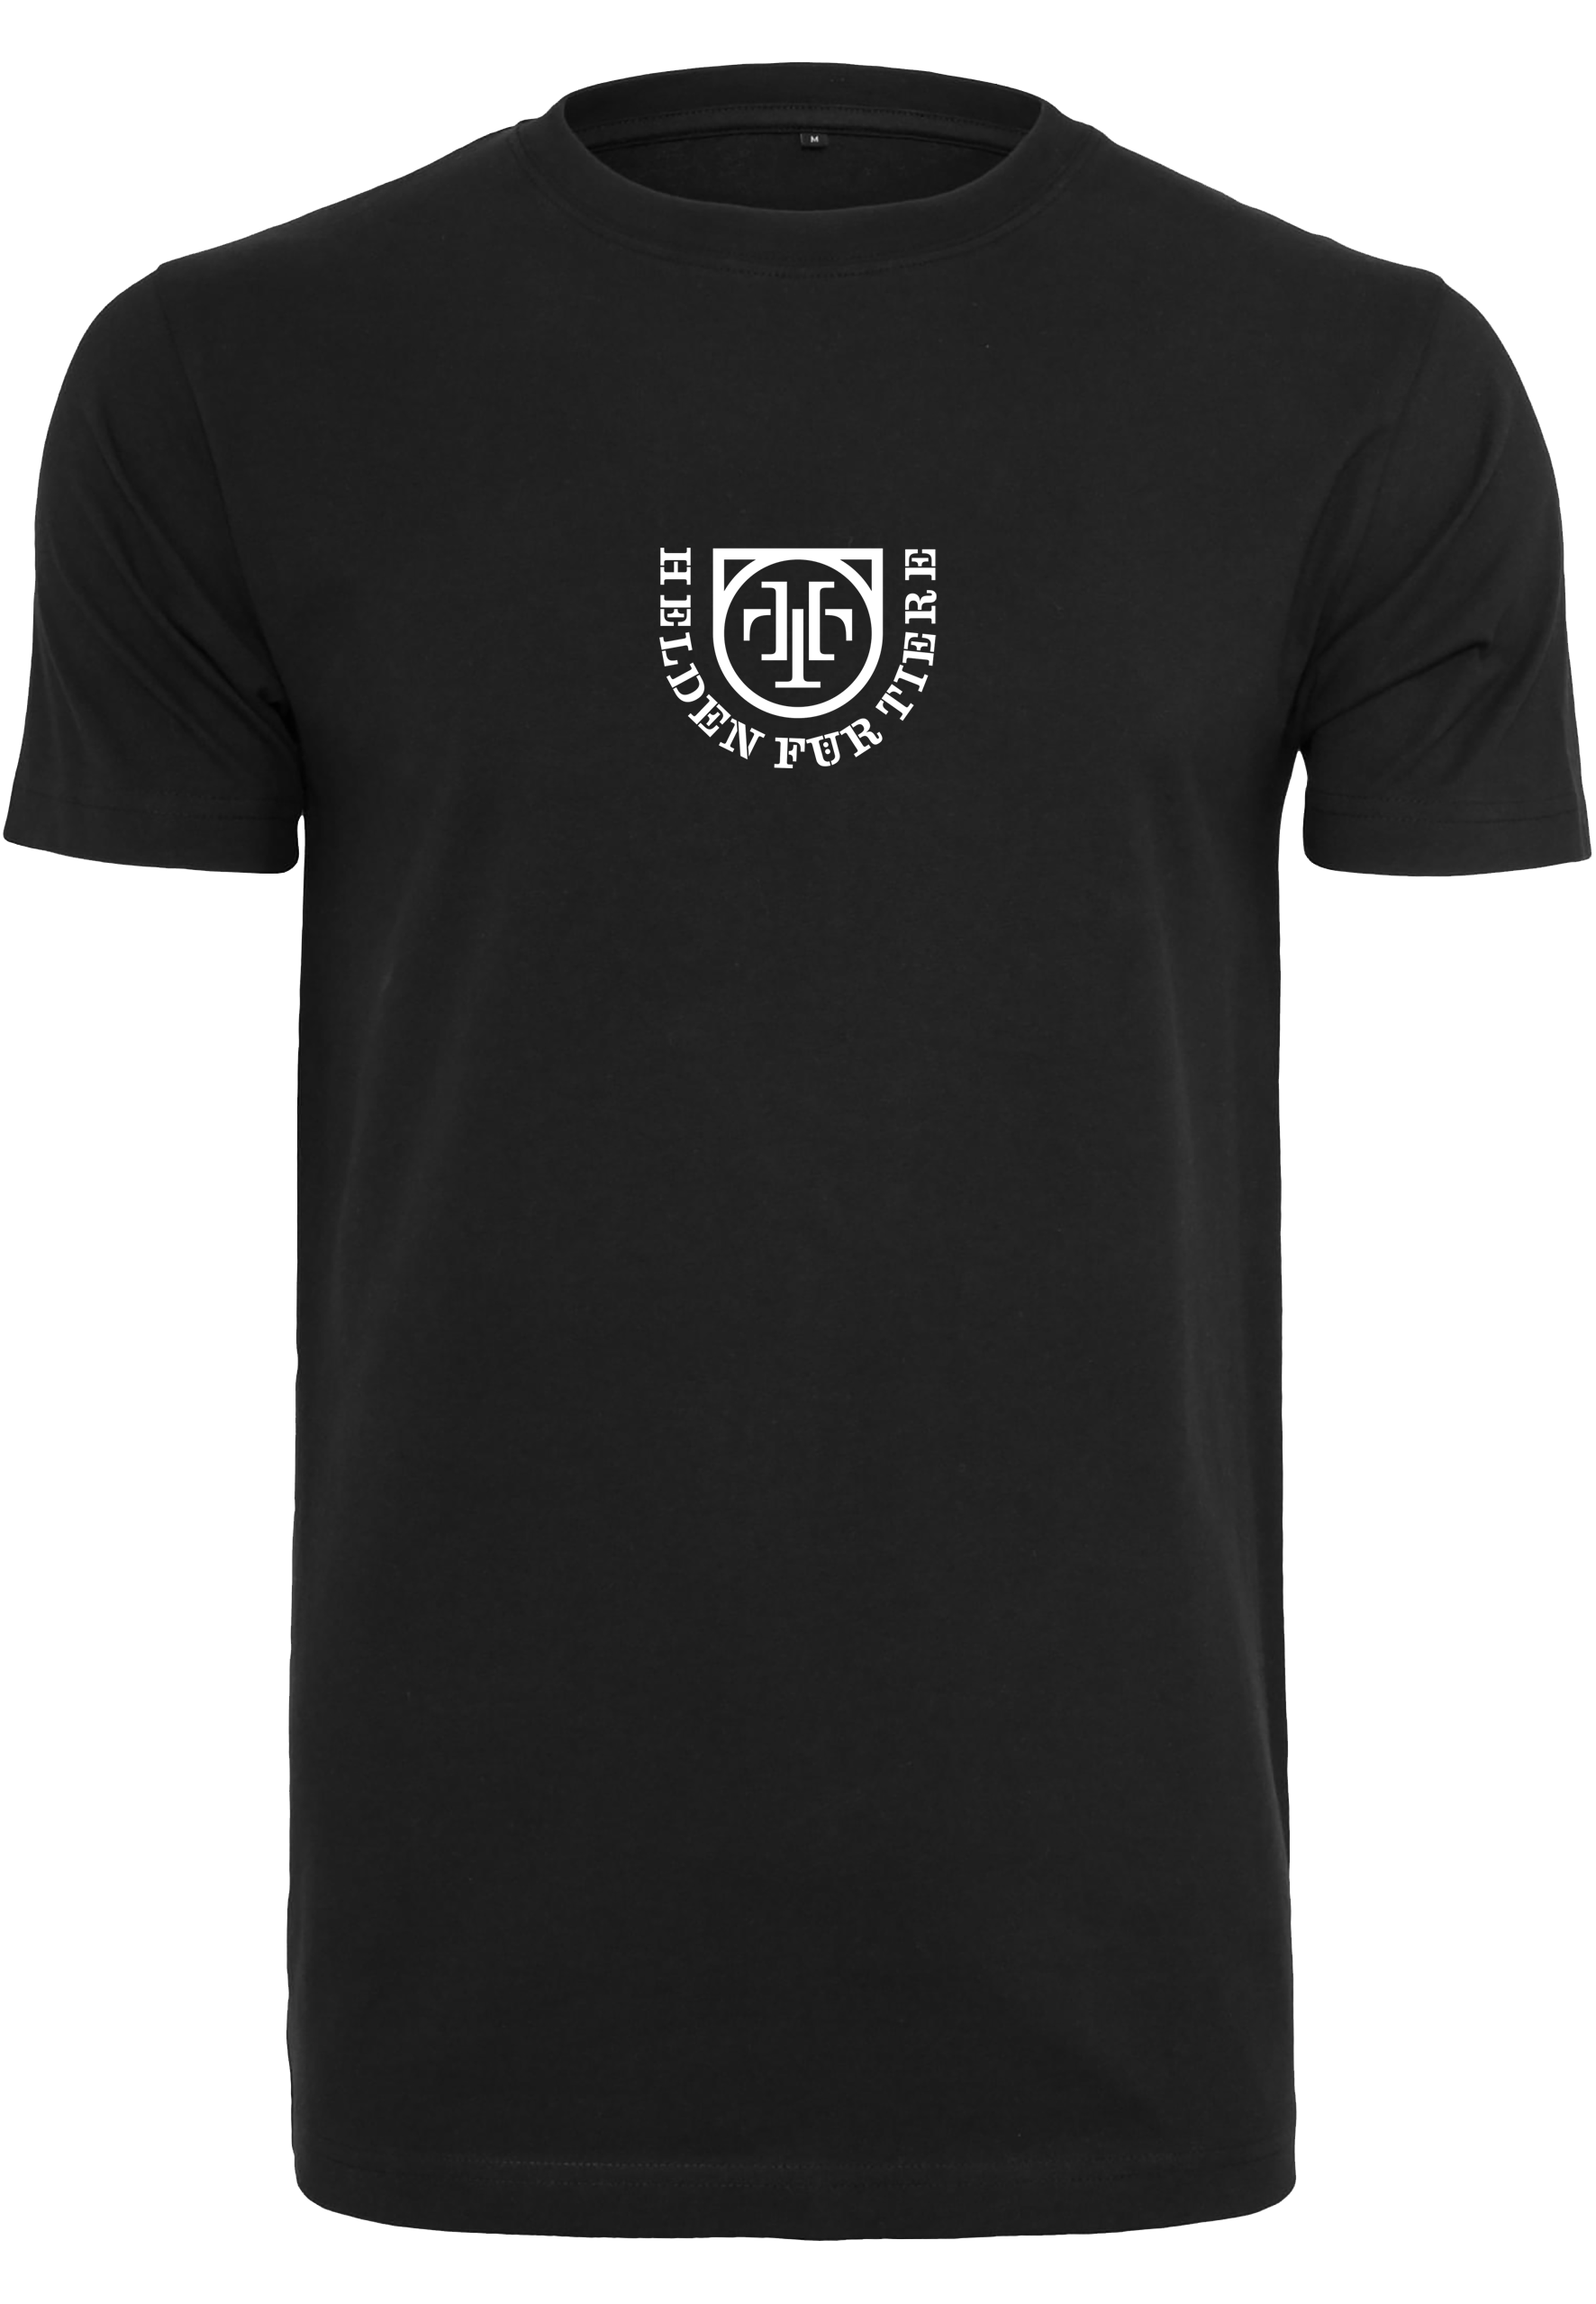 HFT - Harte Hunde Shirt (Black)